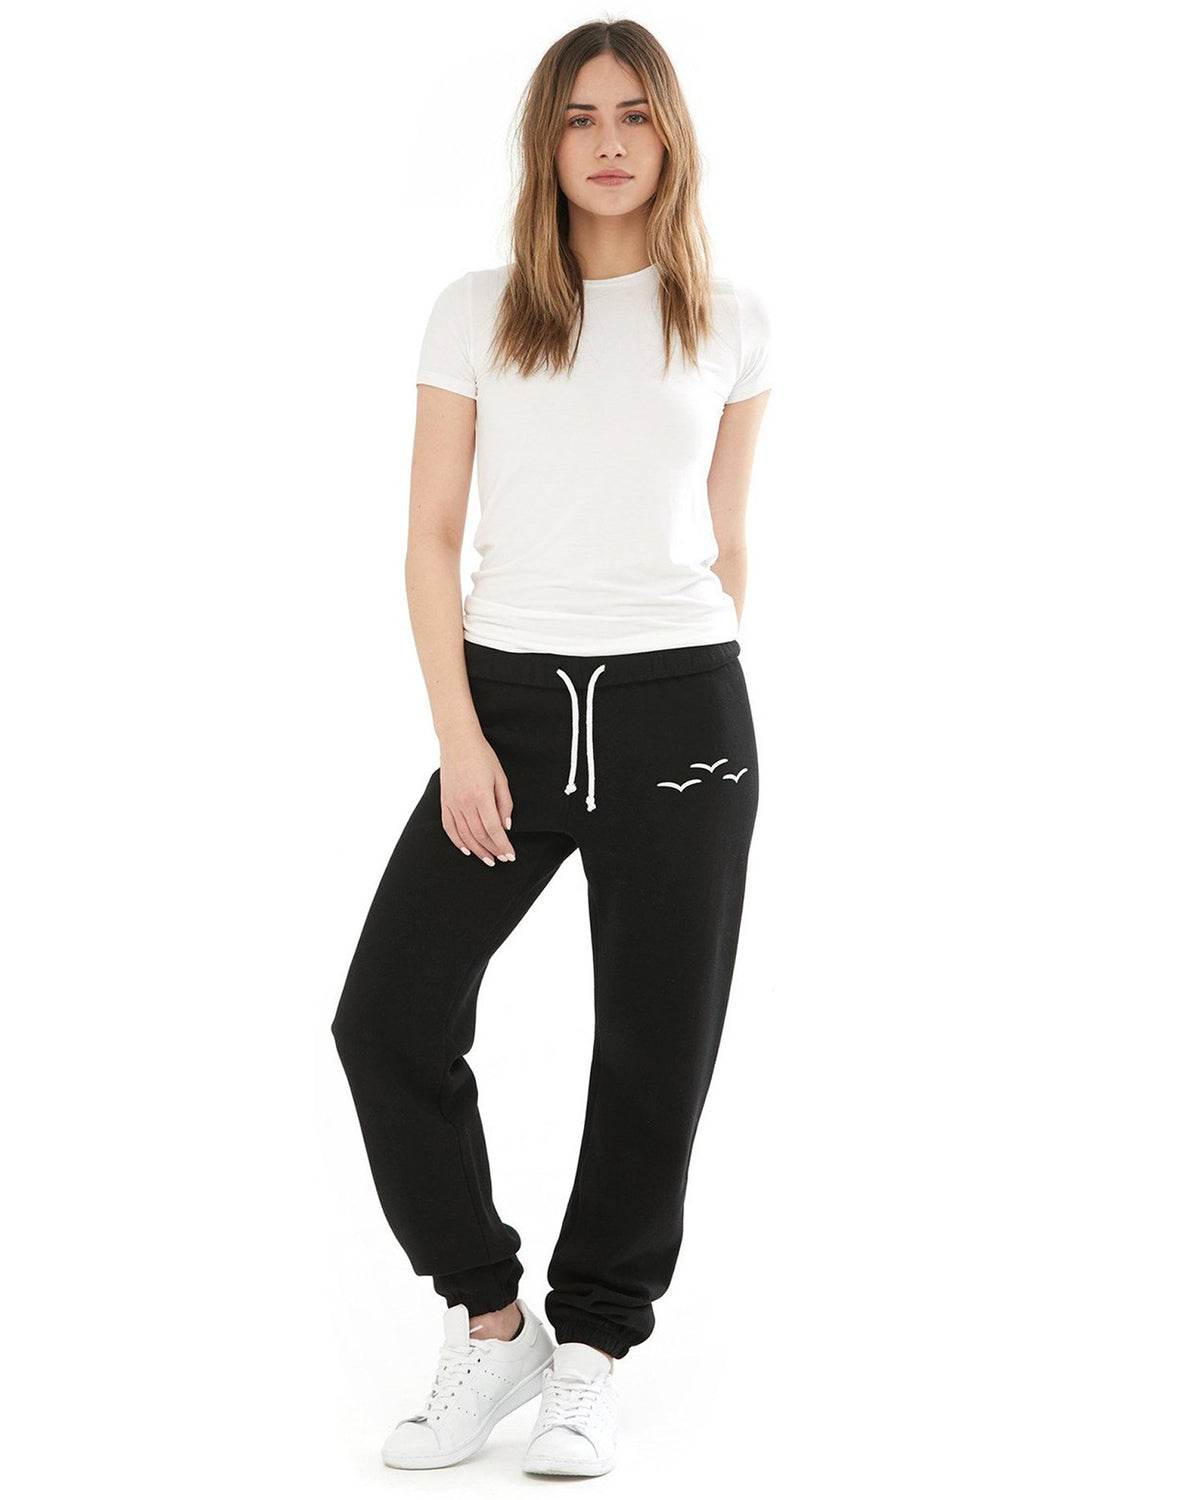 Lazypants Niki Fleece Sweatpants - Girls/Boys - Black - Activewear - Bottoms - Dancewear Centre Canada